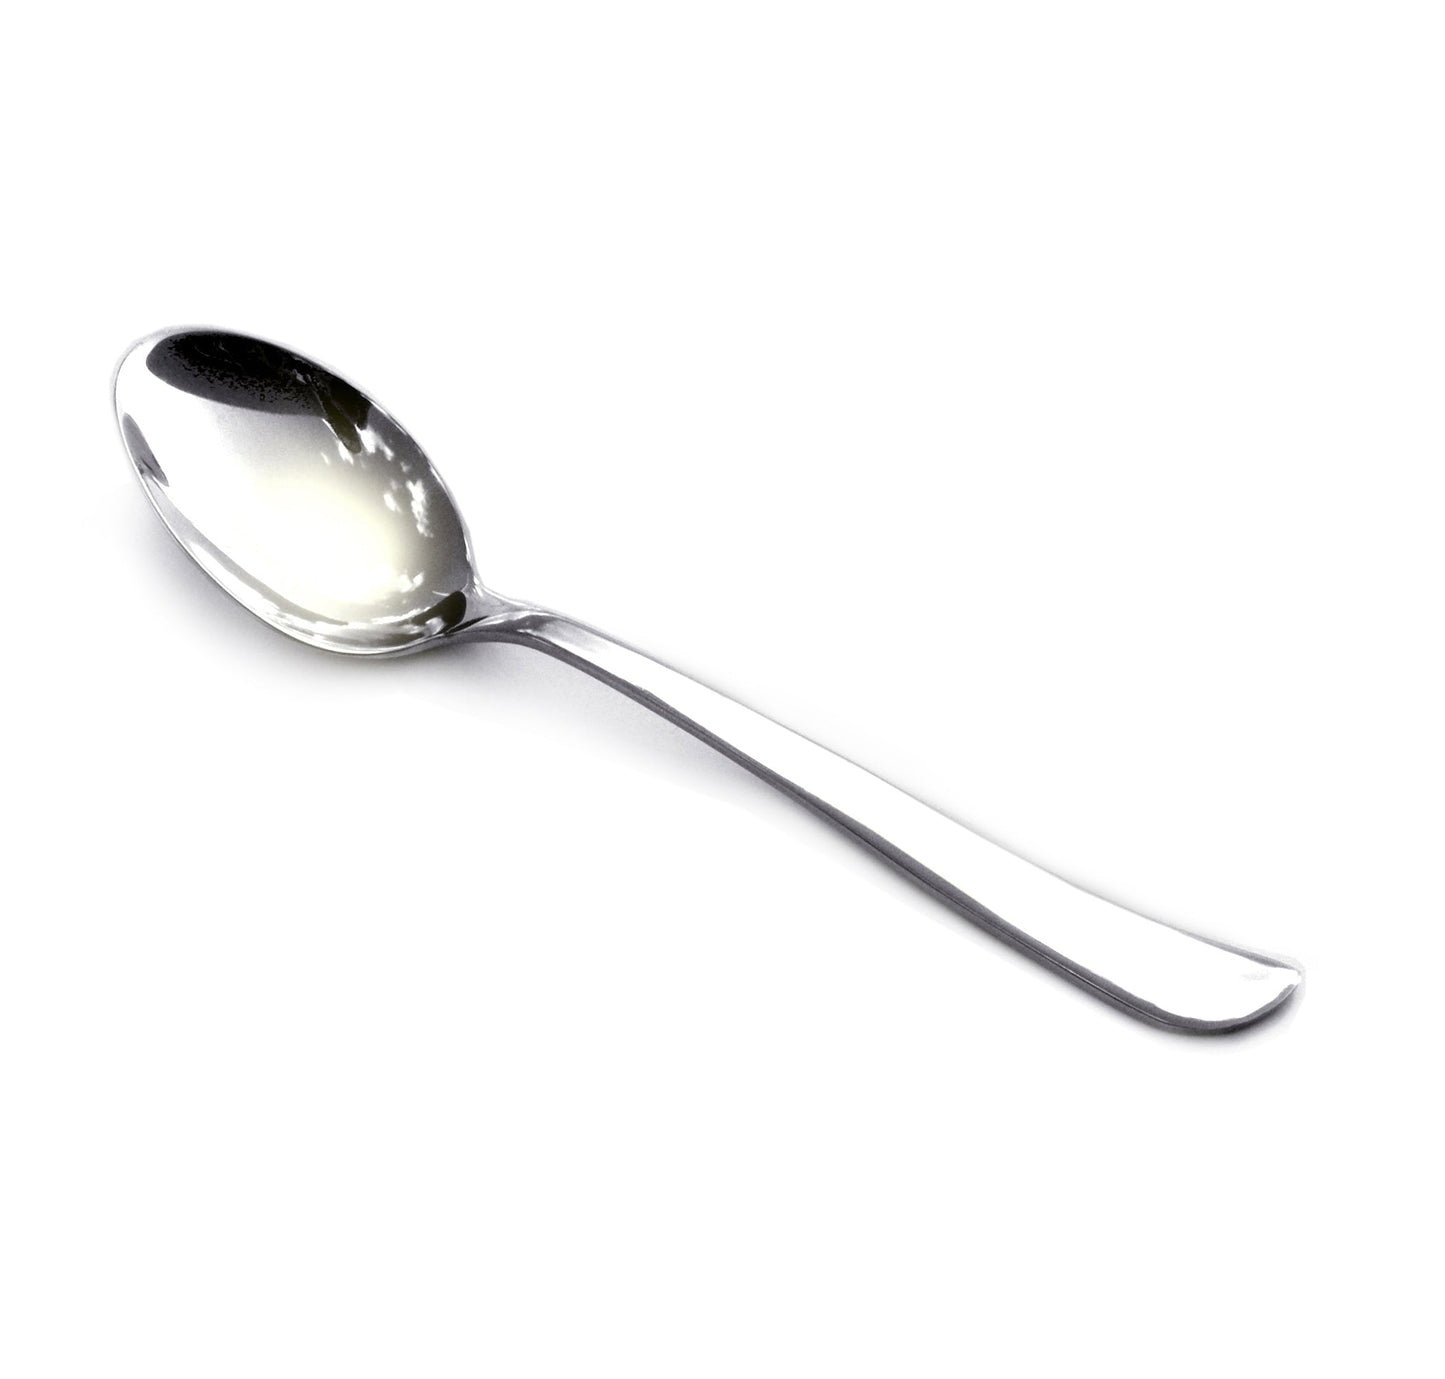 Espresso coffee spoon